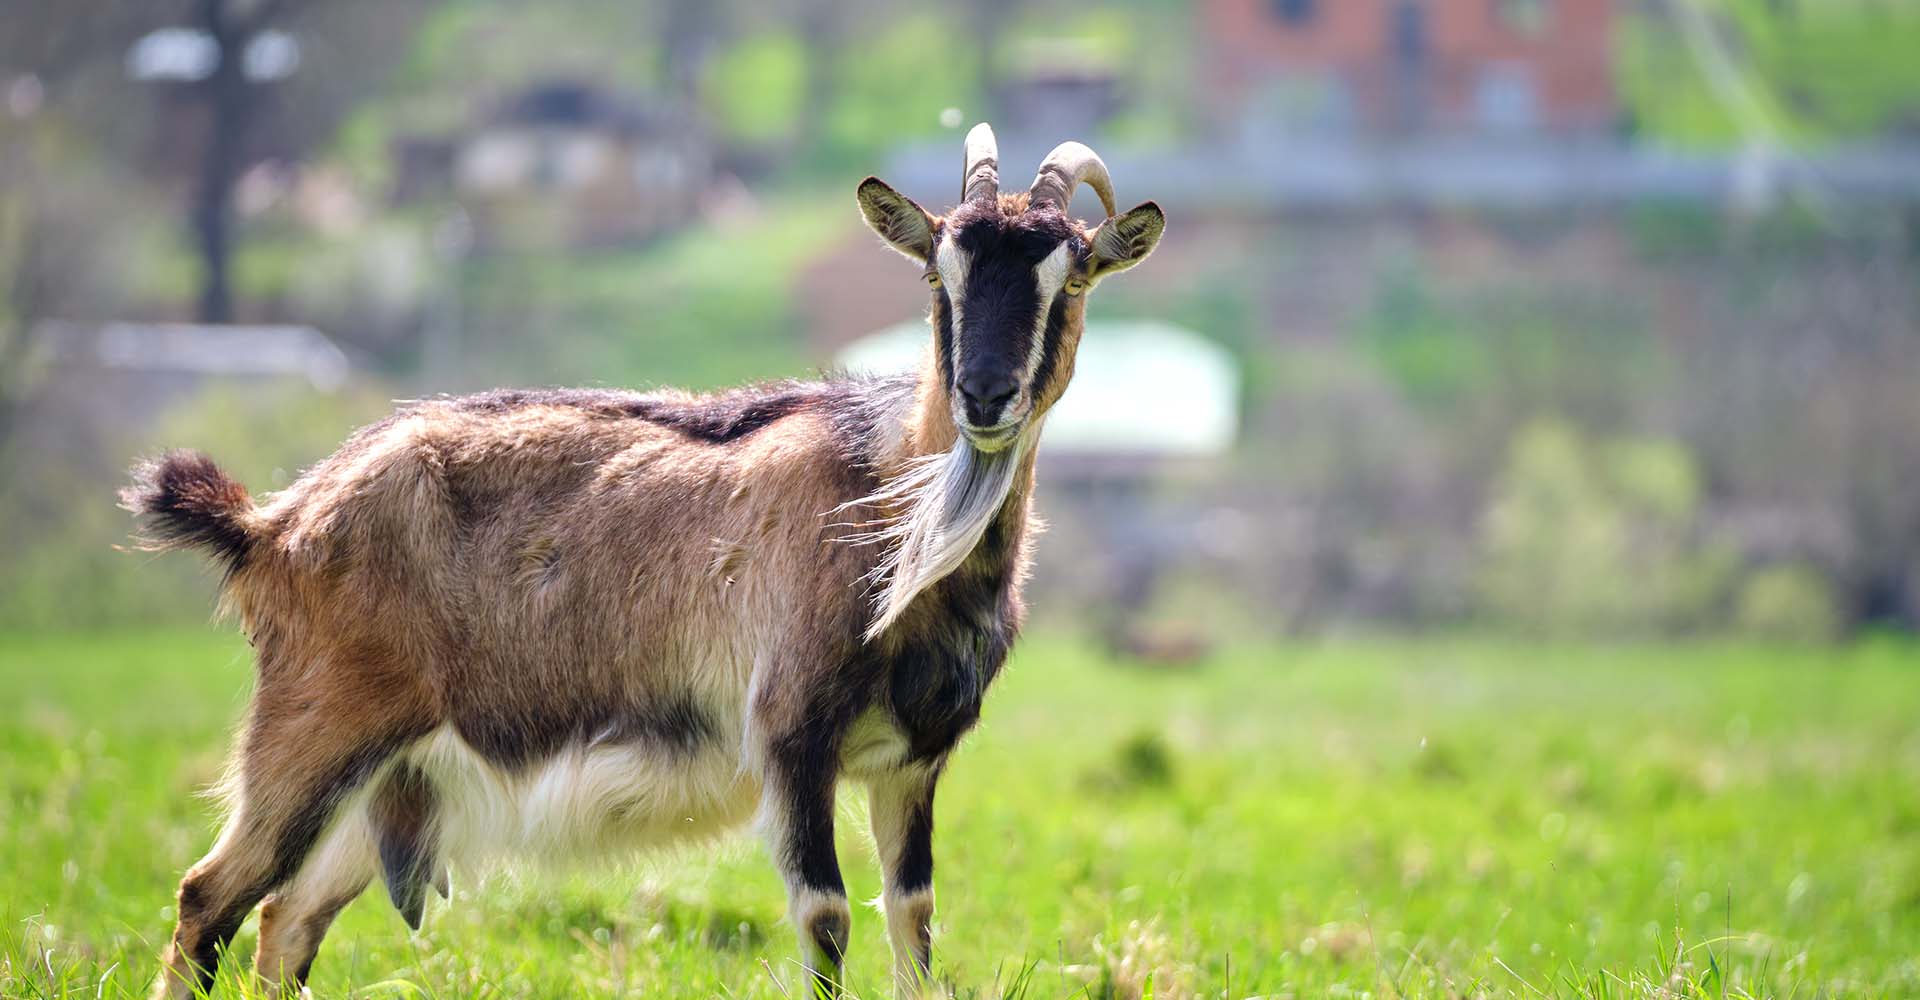 011_0001_domestic-milk-goat-with-long-beard-horns-grazing-green-farm-pasture-summer-day-feeding-cattle-farmland-grasslan